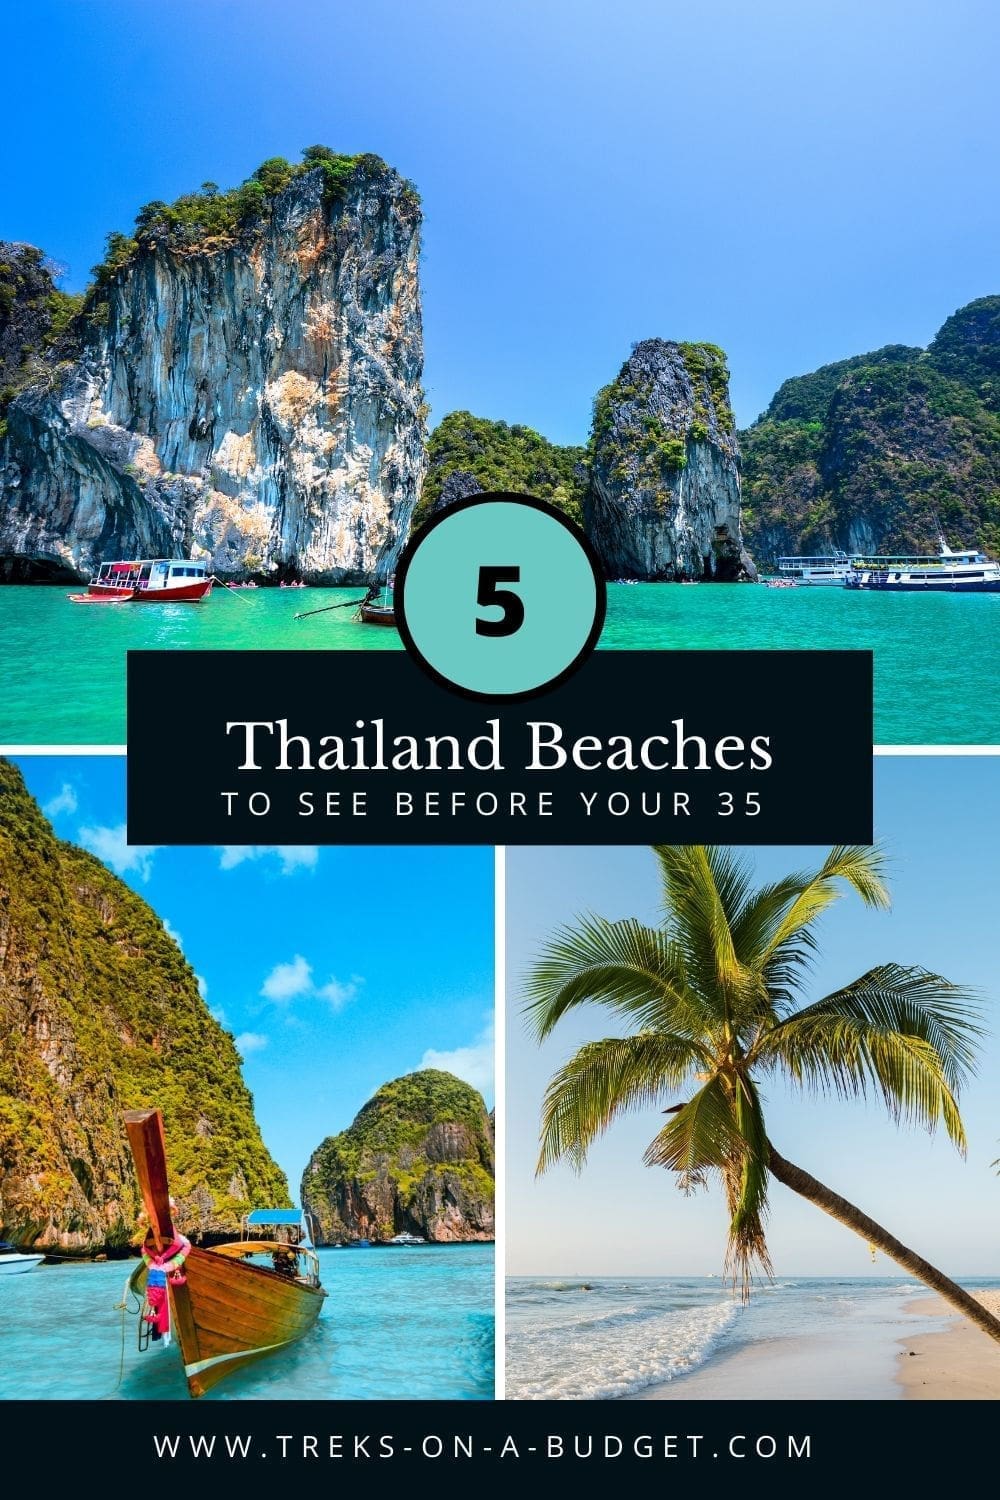 5 Thailand beaches to visit